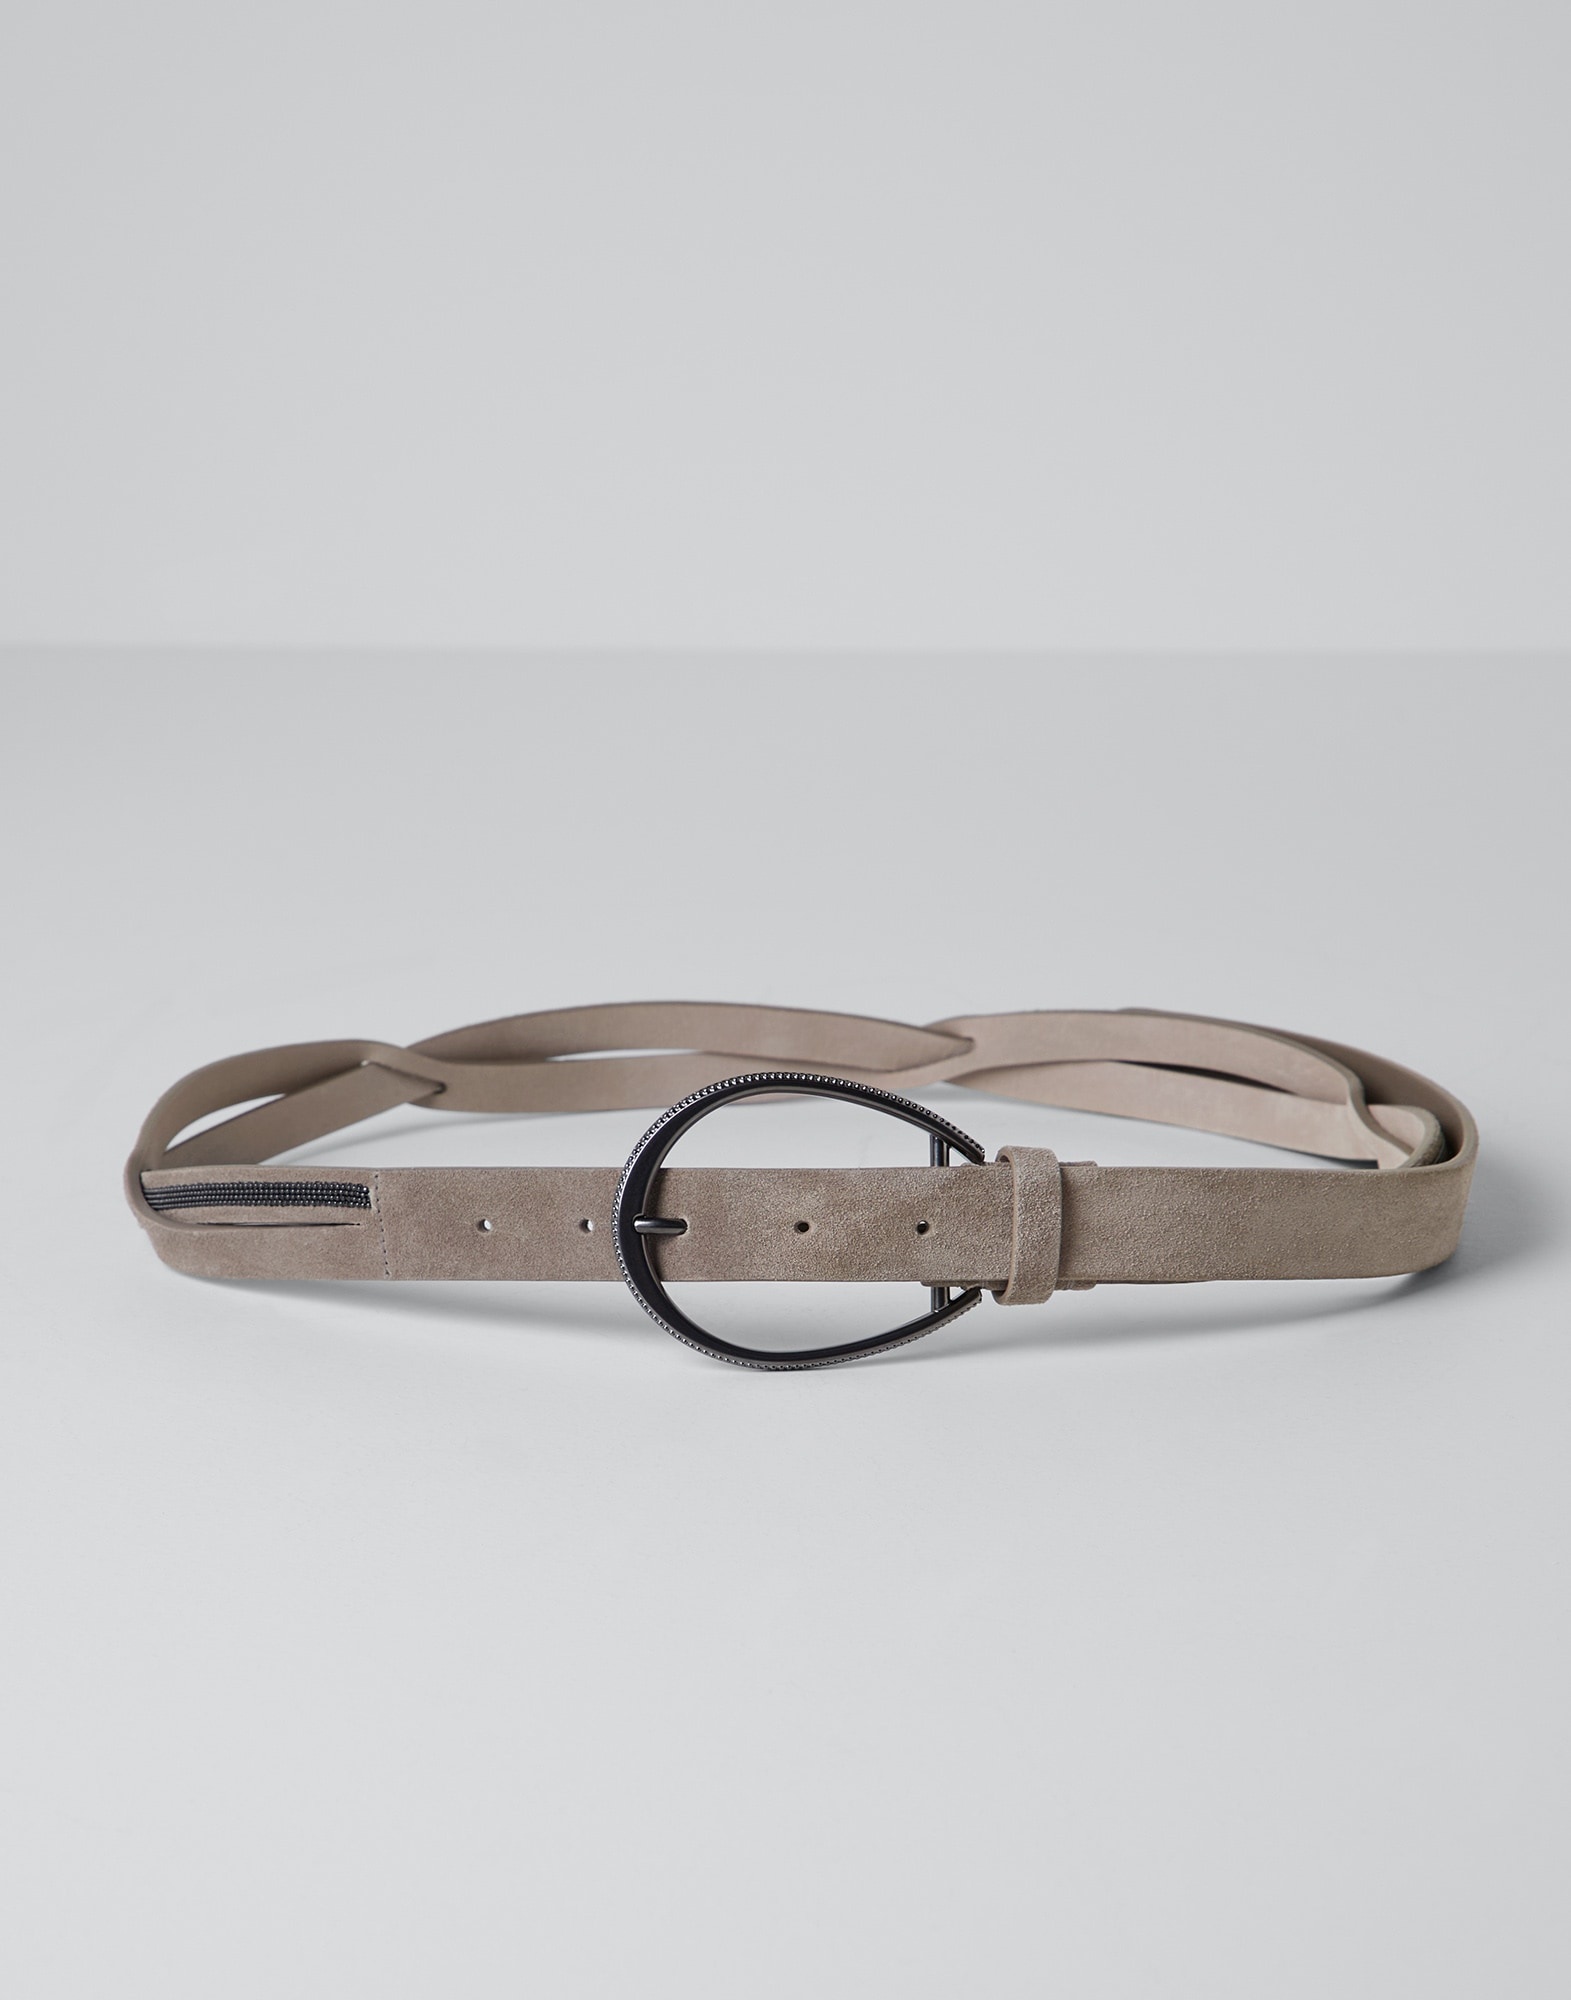 Suede calfskin shiny braid belt - 1